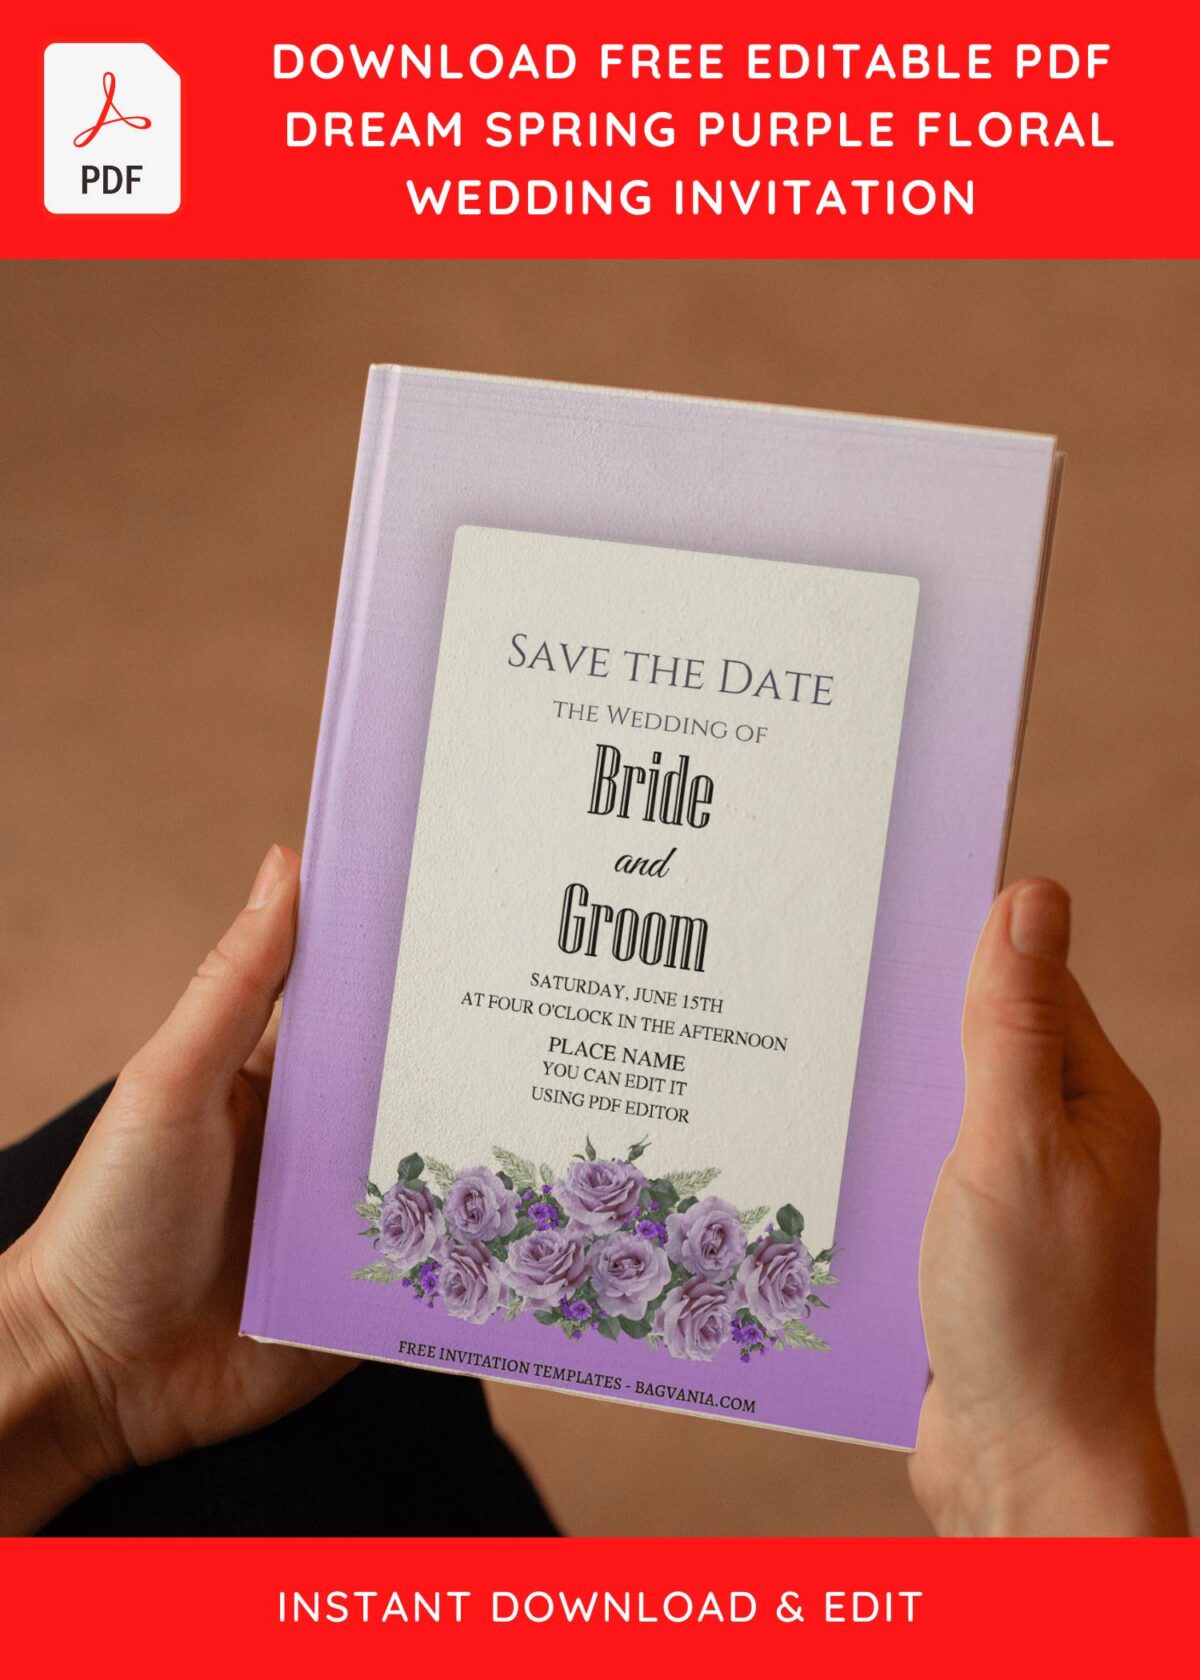 (Free Editable PDF) Dreamy Purple Flowers Wedding Invitation Templates with elegant font styles